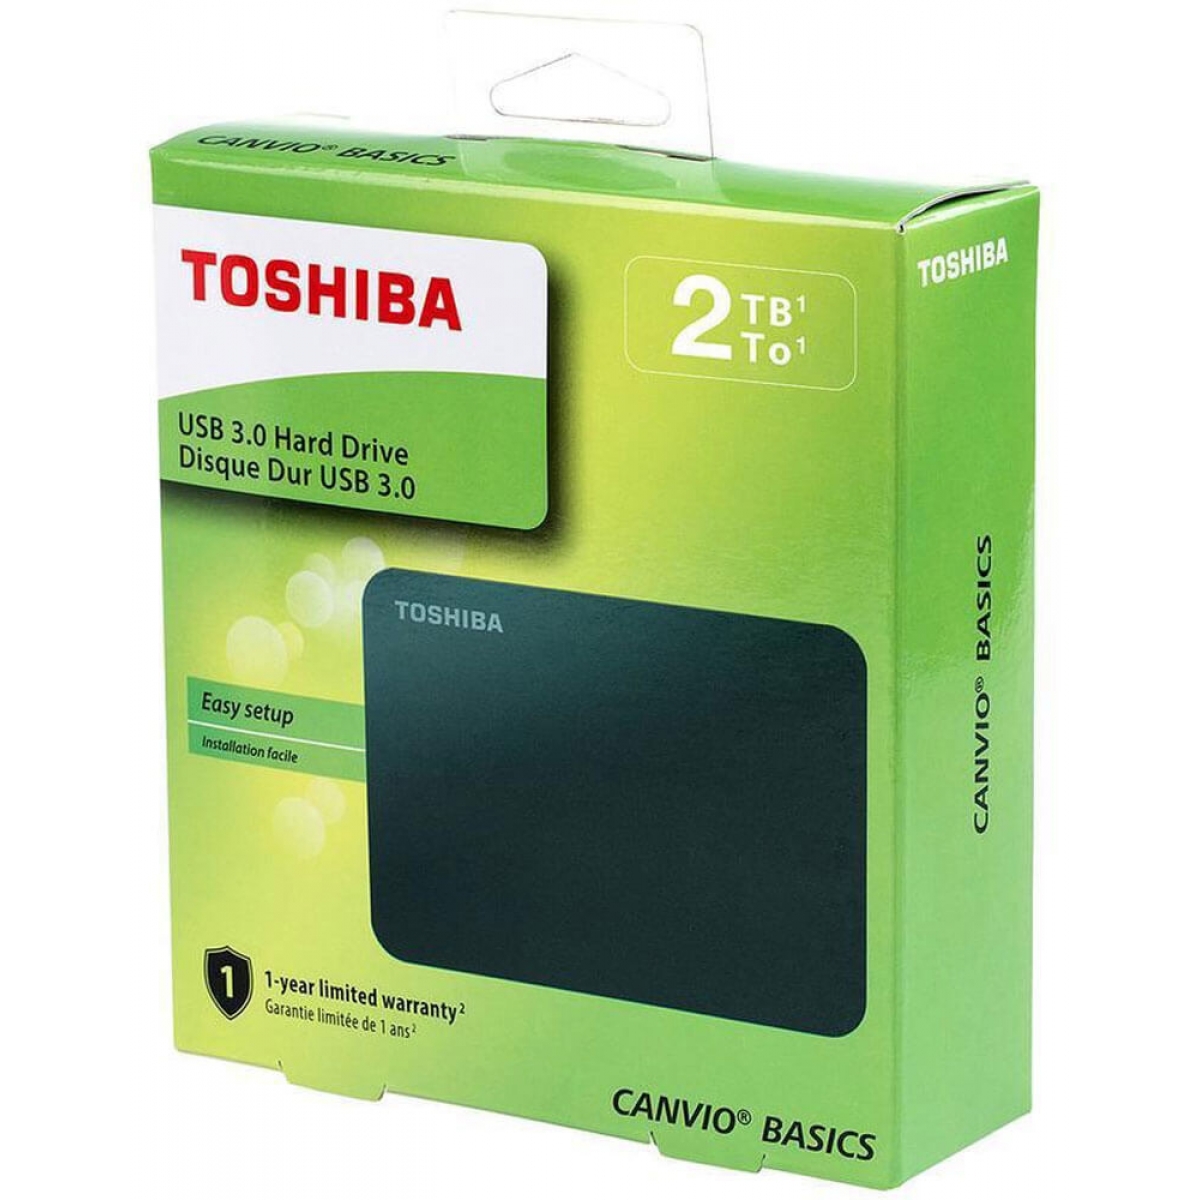 HD Externo Portátil Toshiba Canvio Basics 2TB HDTB420XK3AA USB 3.0 Preto